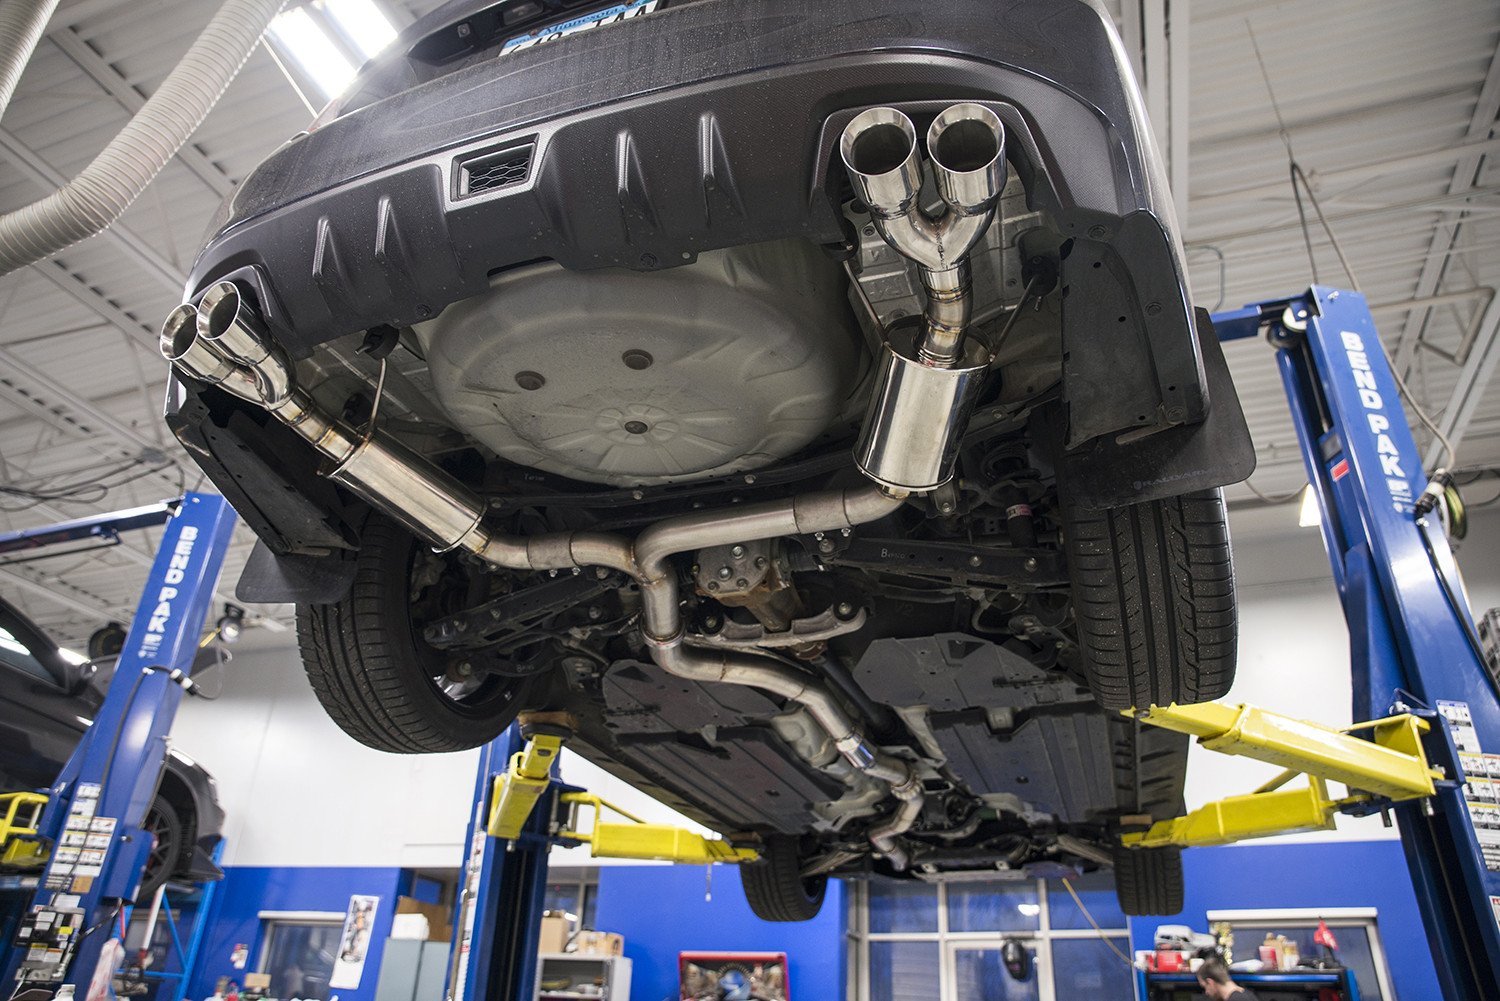 Subaru WRX Stage 2 Upgrade Kit | 2015-2020 FA20 WRX MT Performance Package